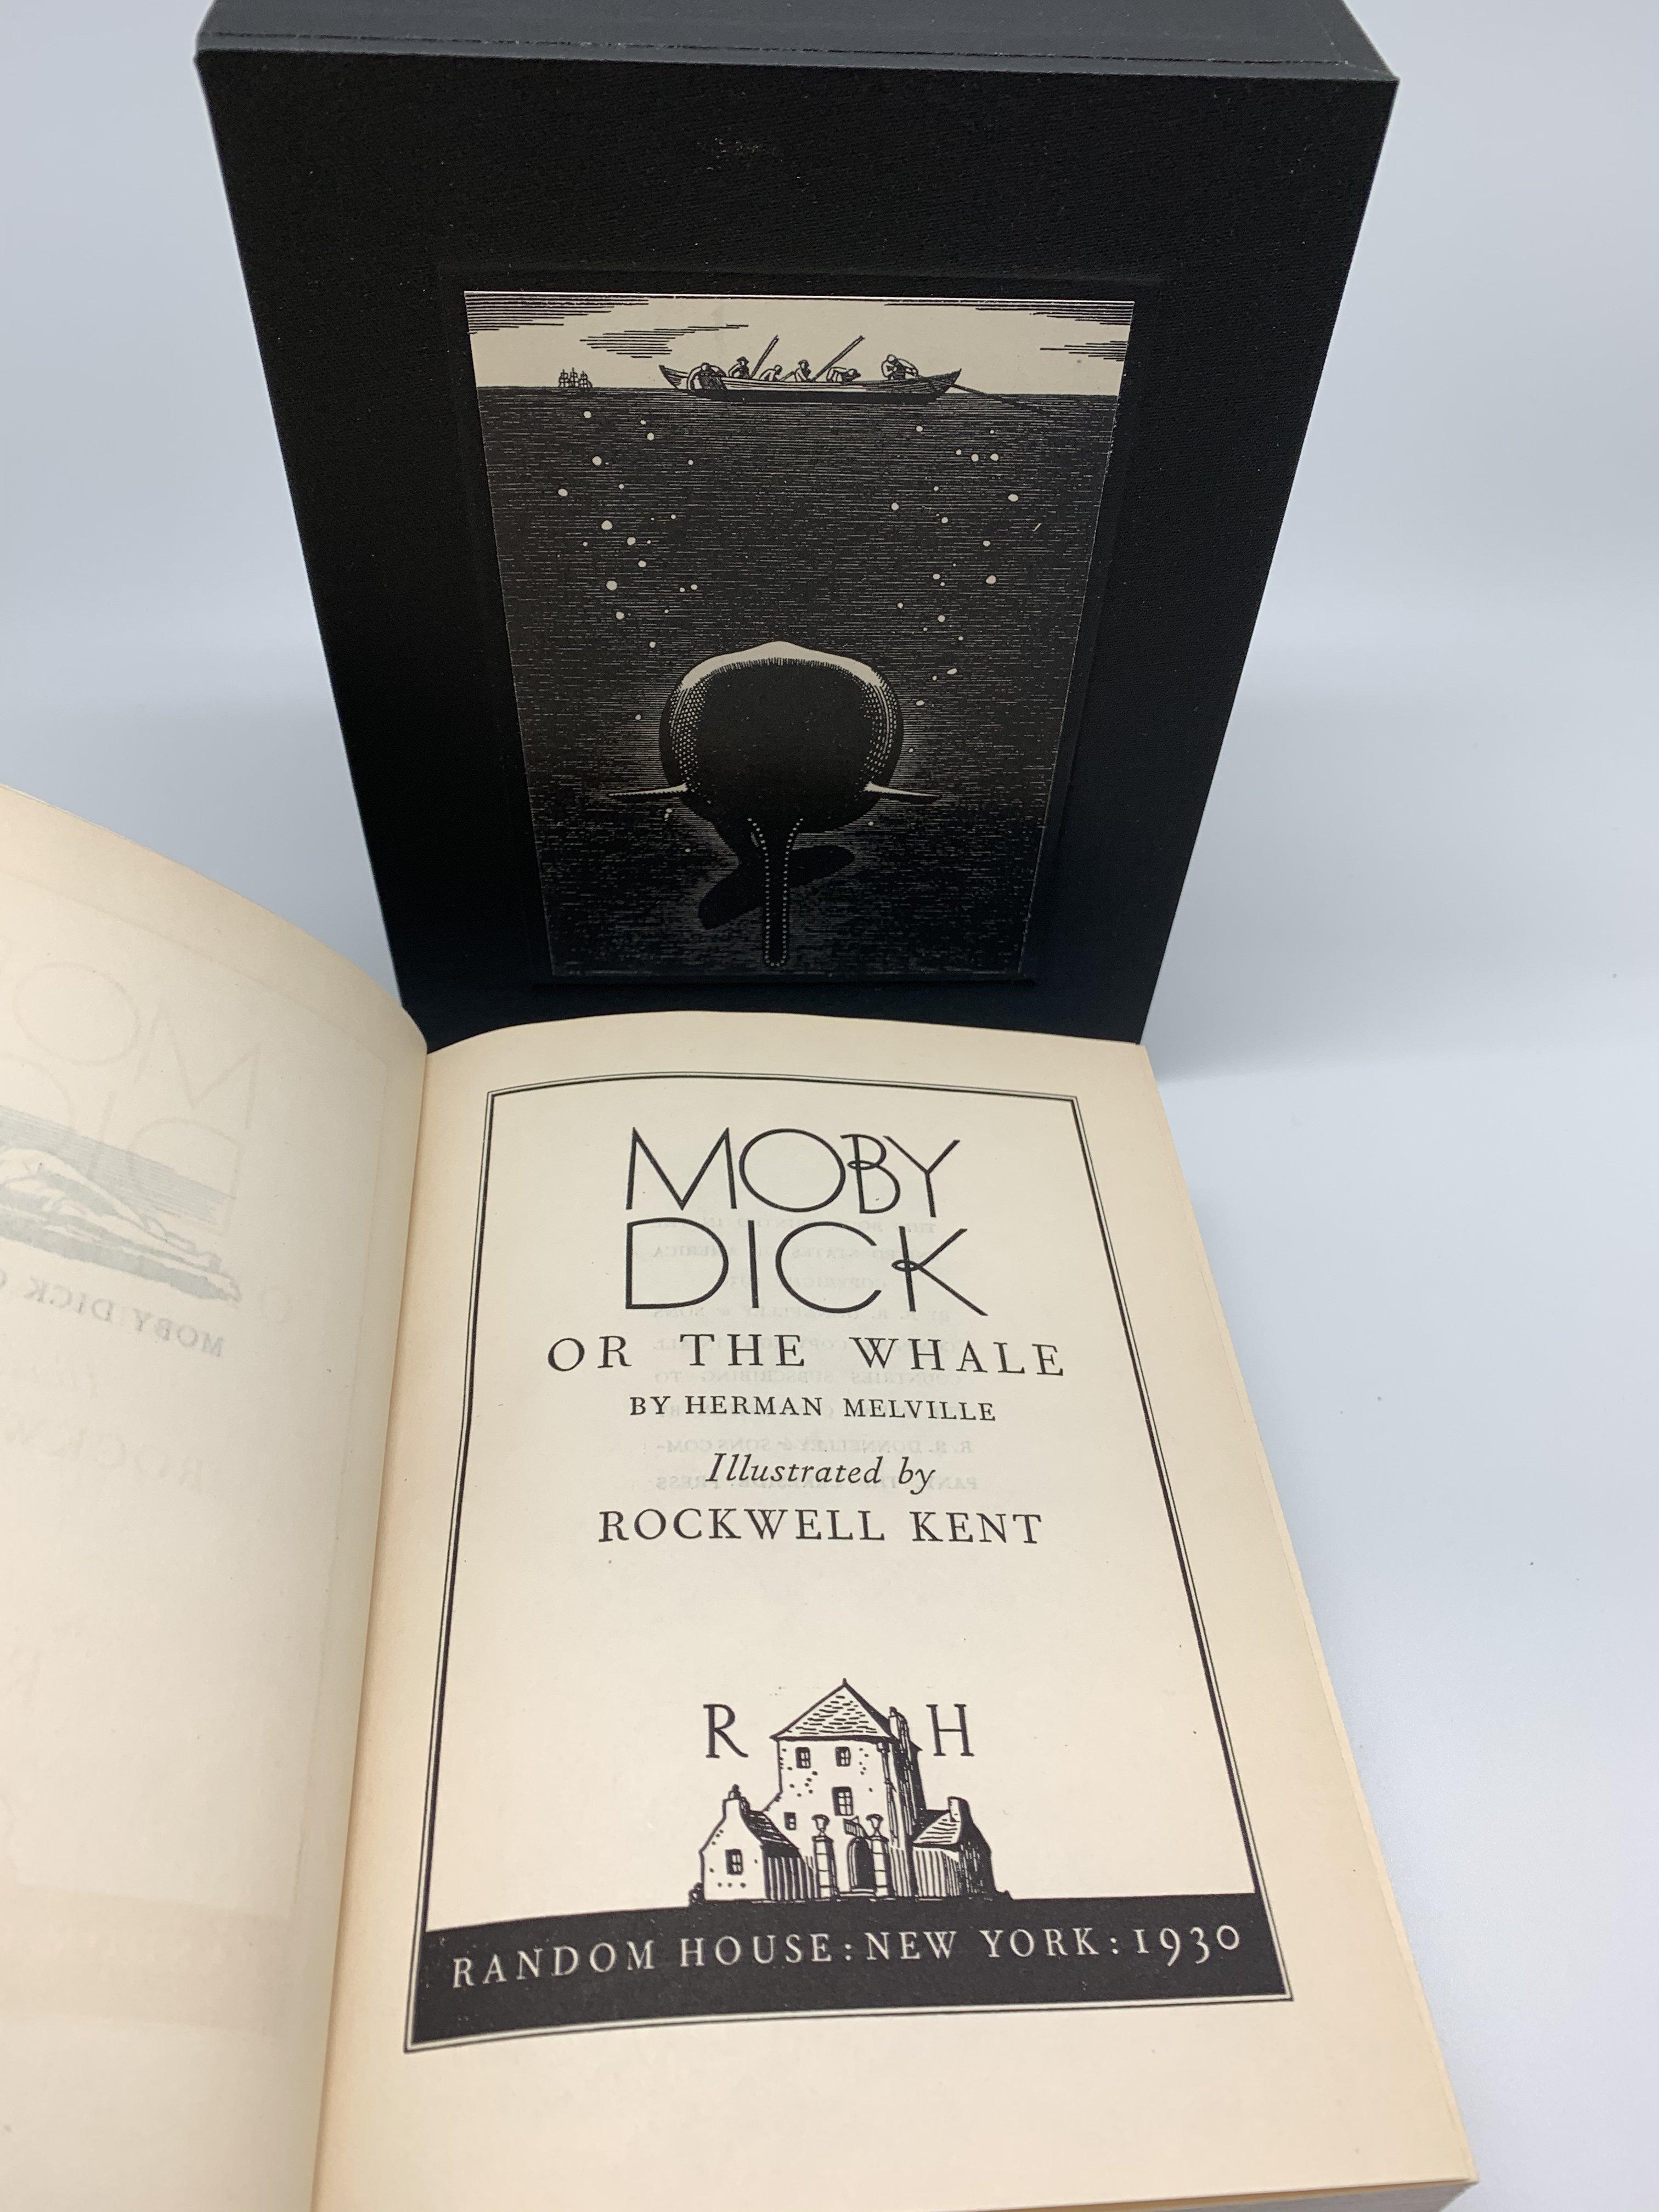 Moby Dick de Herman Melville, primera edición, ilustrada por Rockwell Kent, 1930 Estadounidense en venta